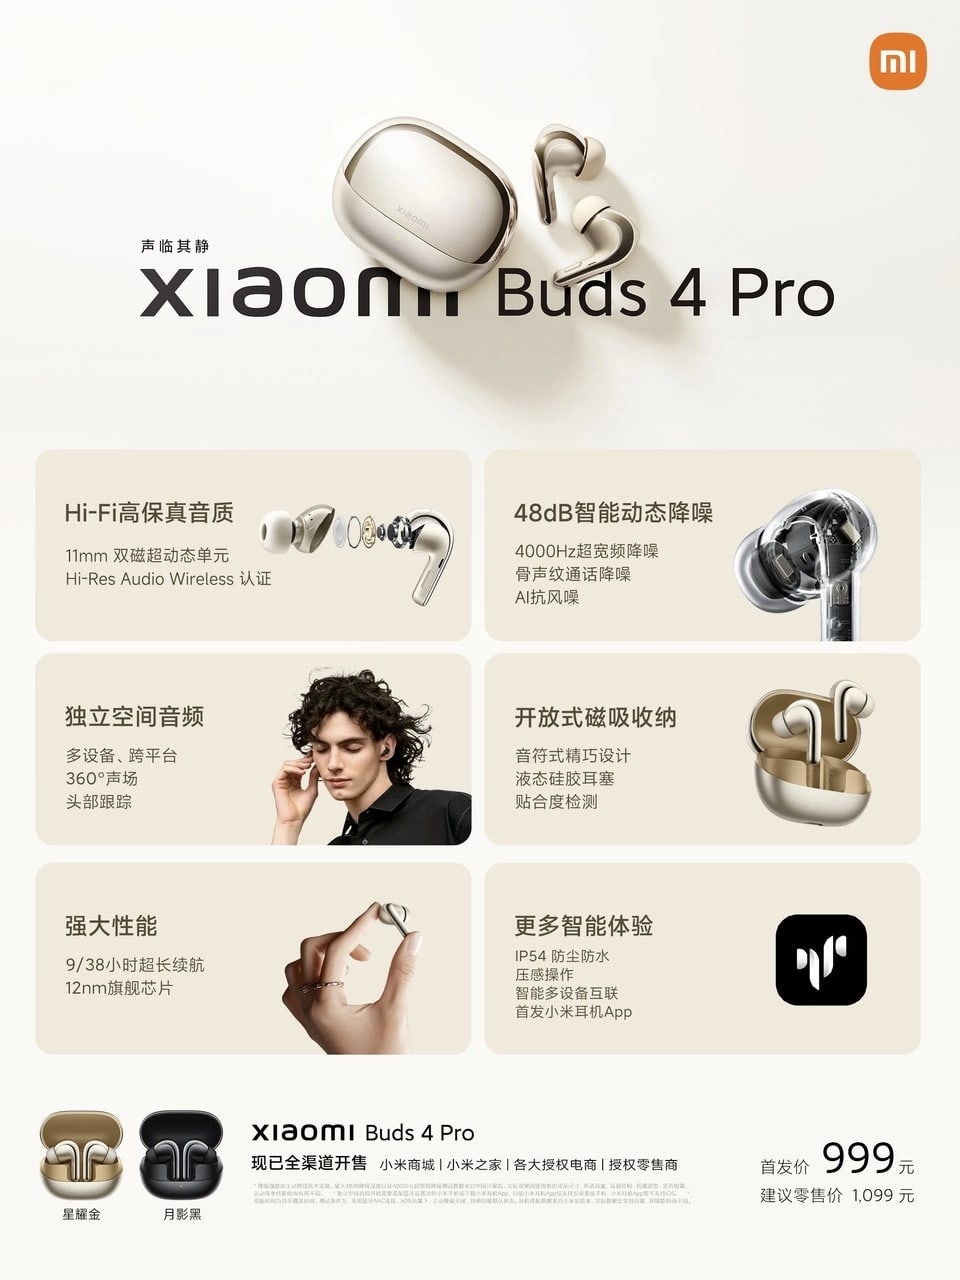 Следующая новинка от Xiaomi — наушники Buds 4 Pro: